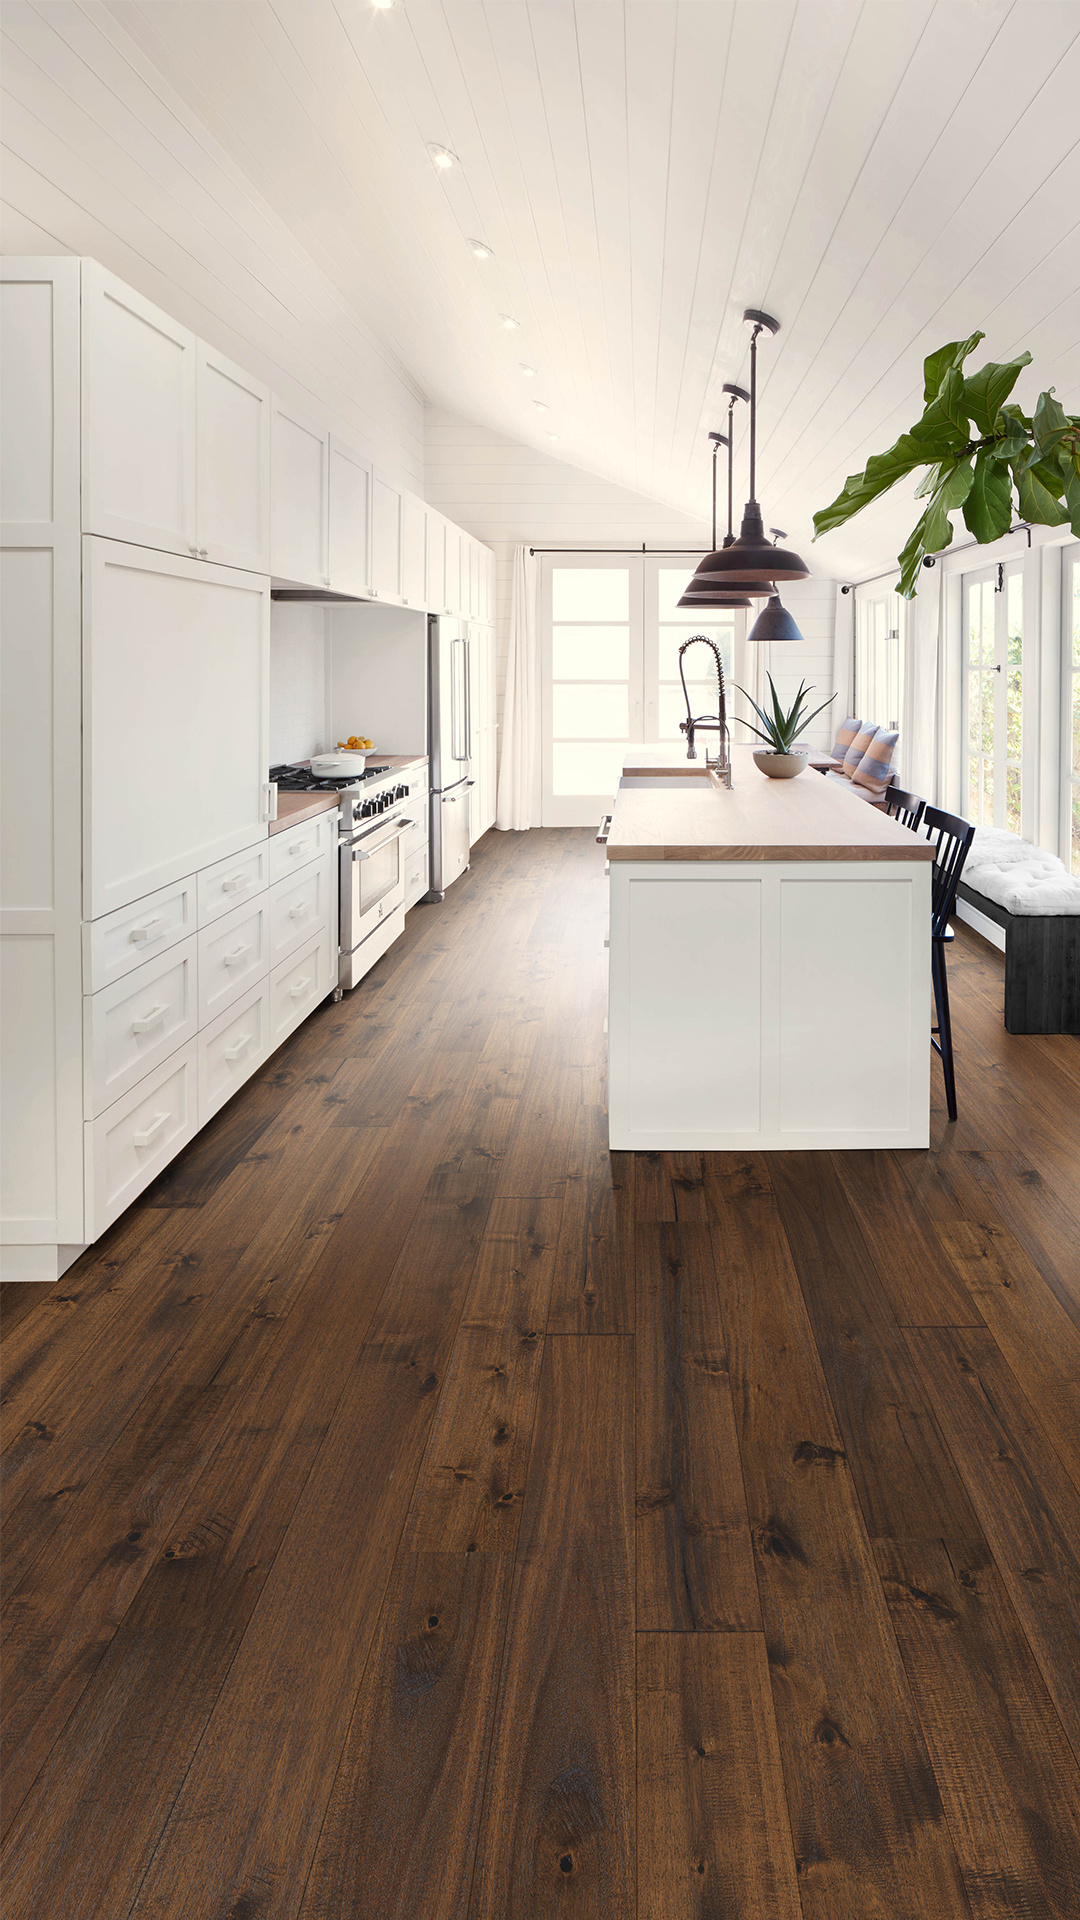 Hardwood Floor, Wood floors in kitchen, Warm and inviting, Rustic charm, 1080x1920 Full HD Handy